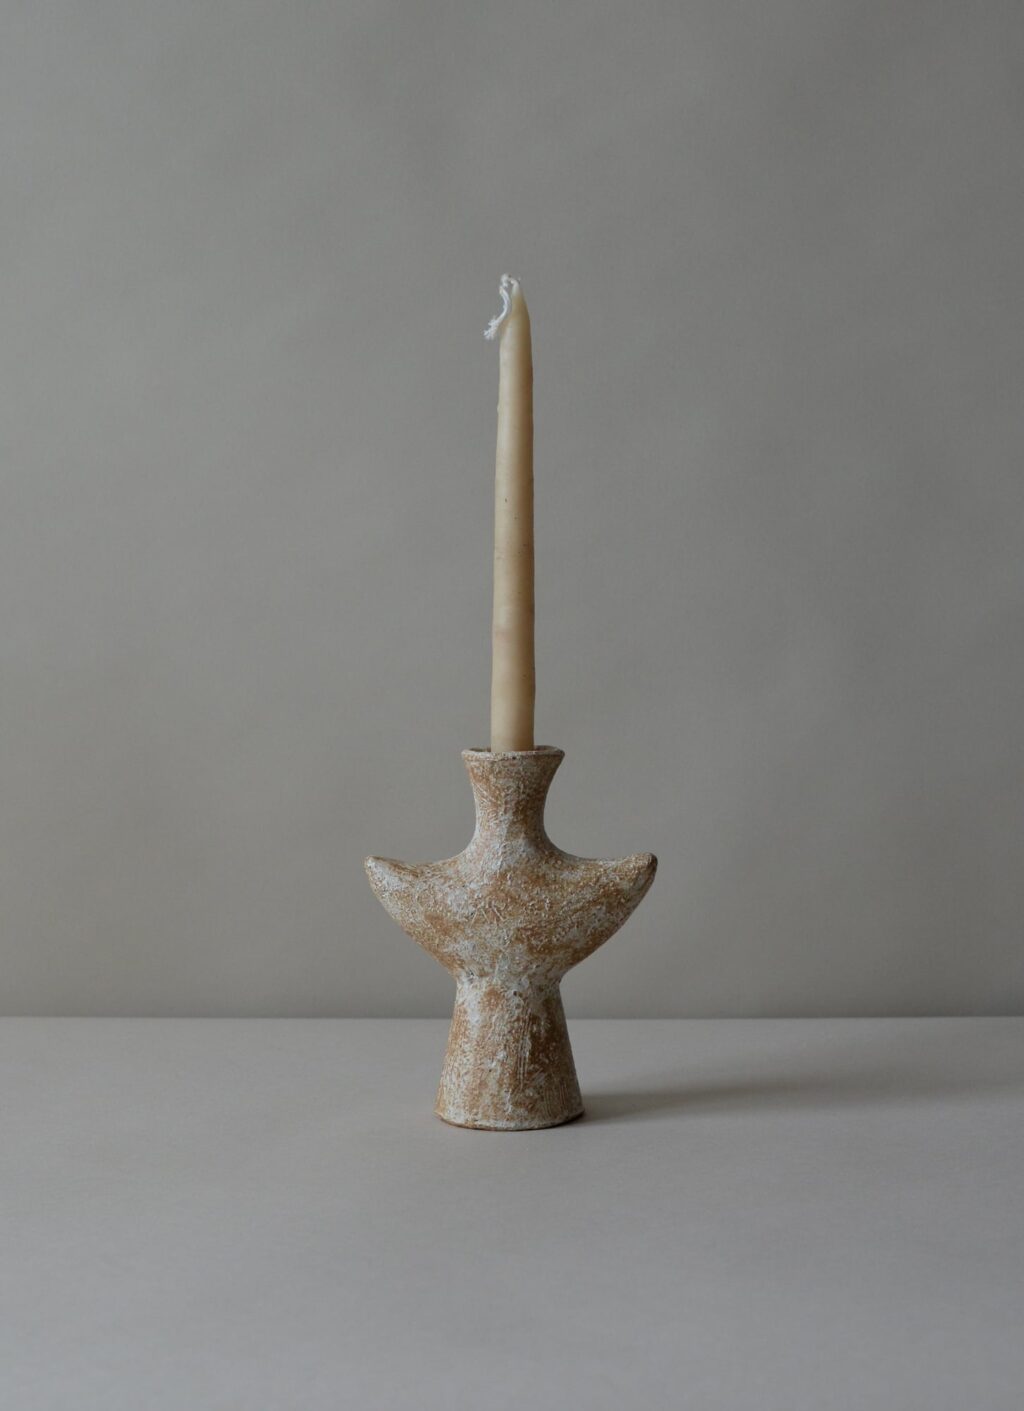 Viv Lee - Handmade stoneware - Wild clay edition - Candle holder - Ornis No. 1